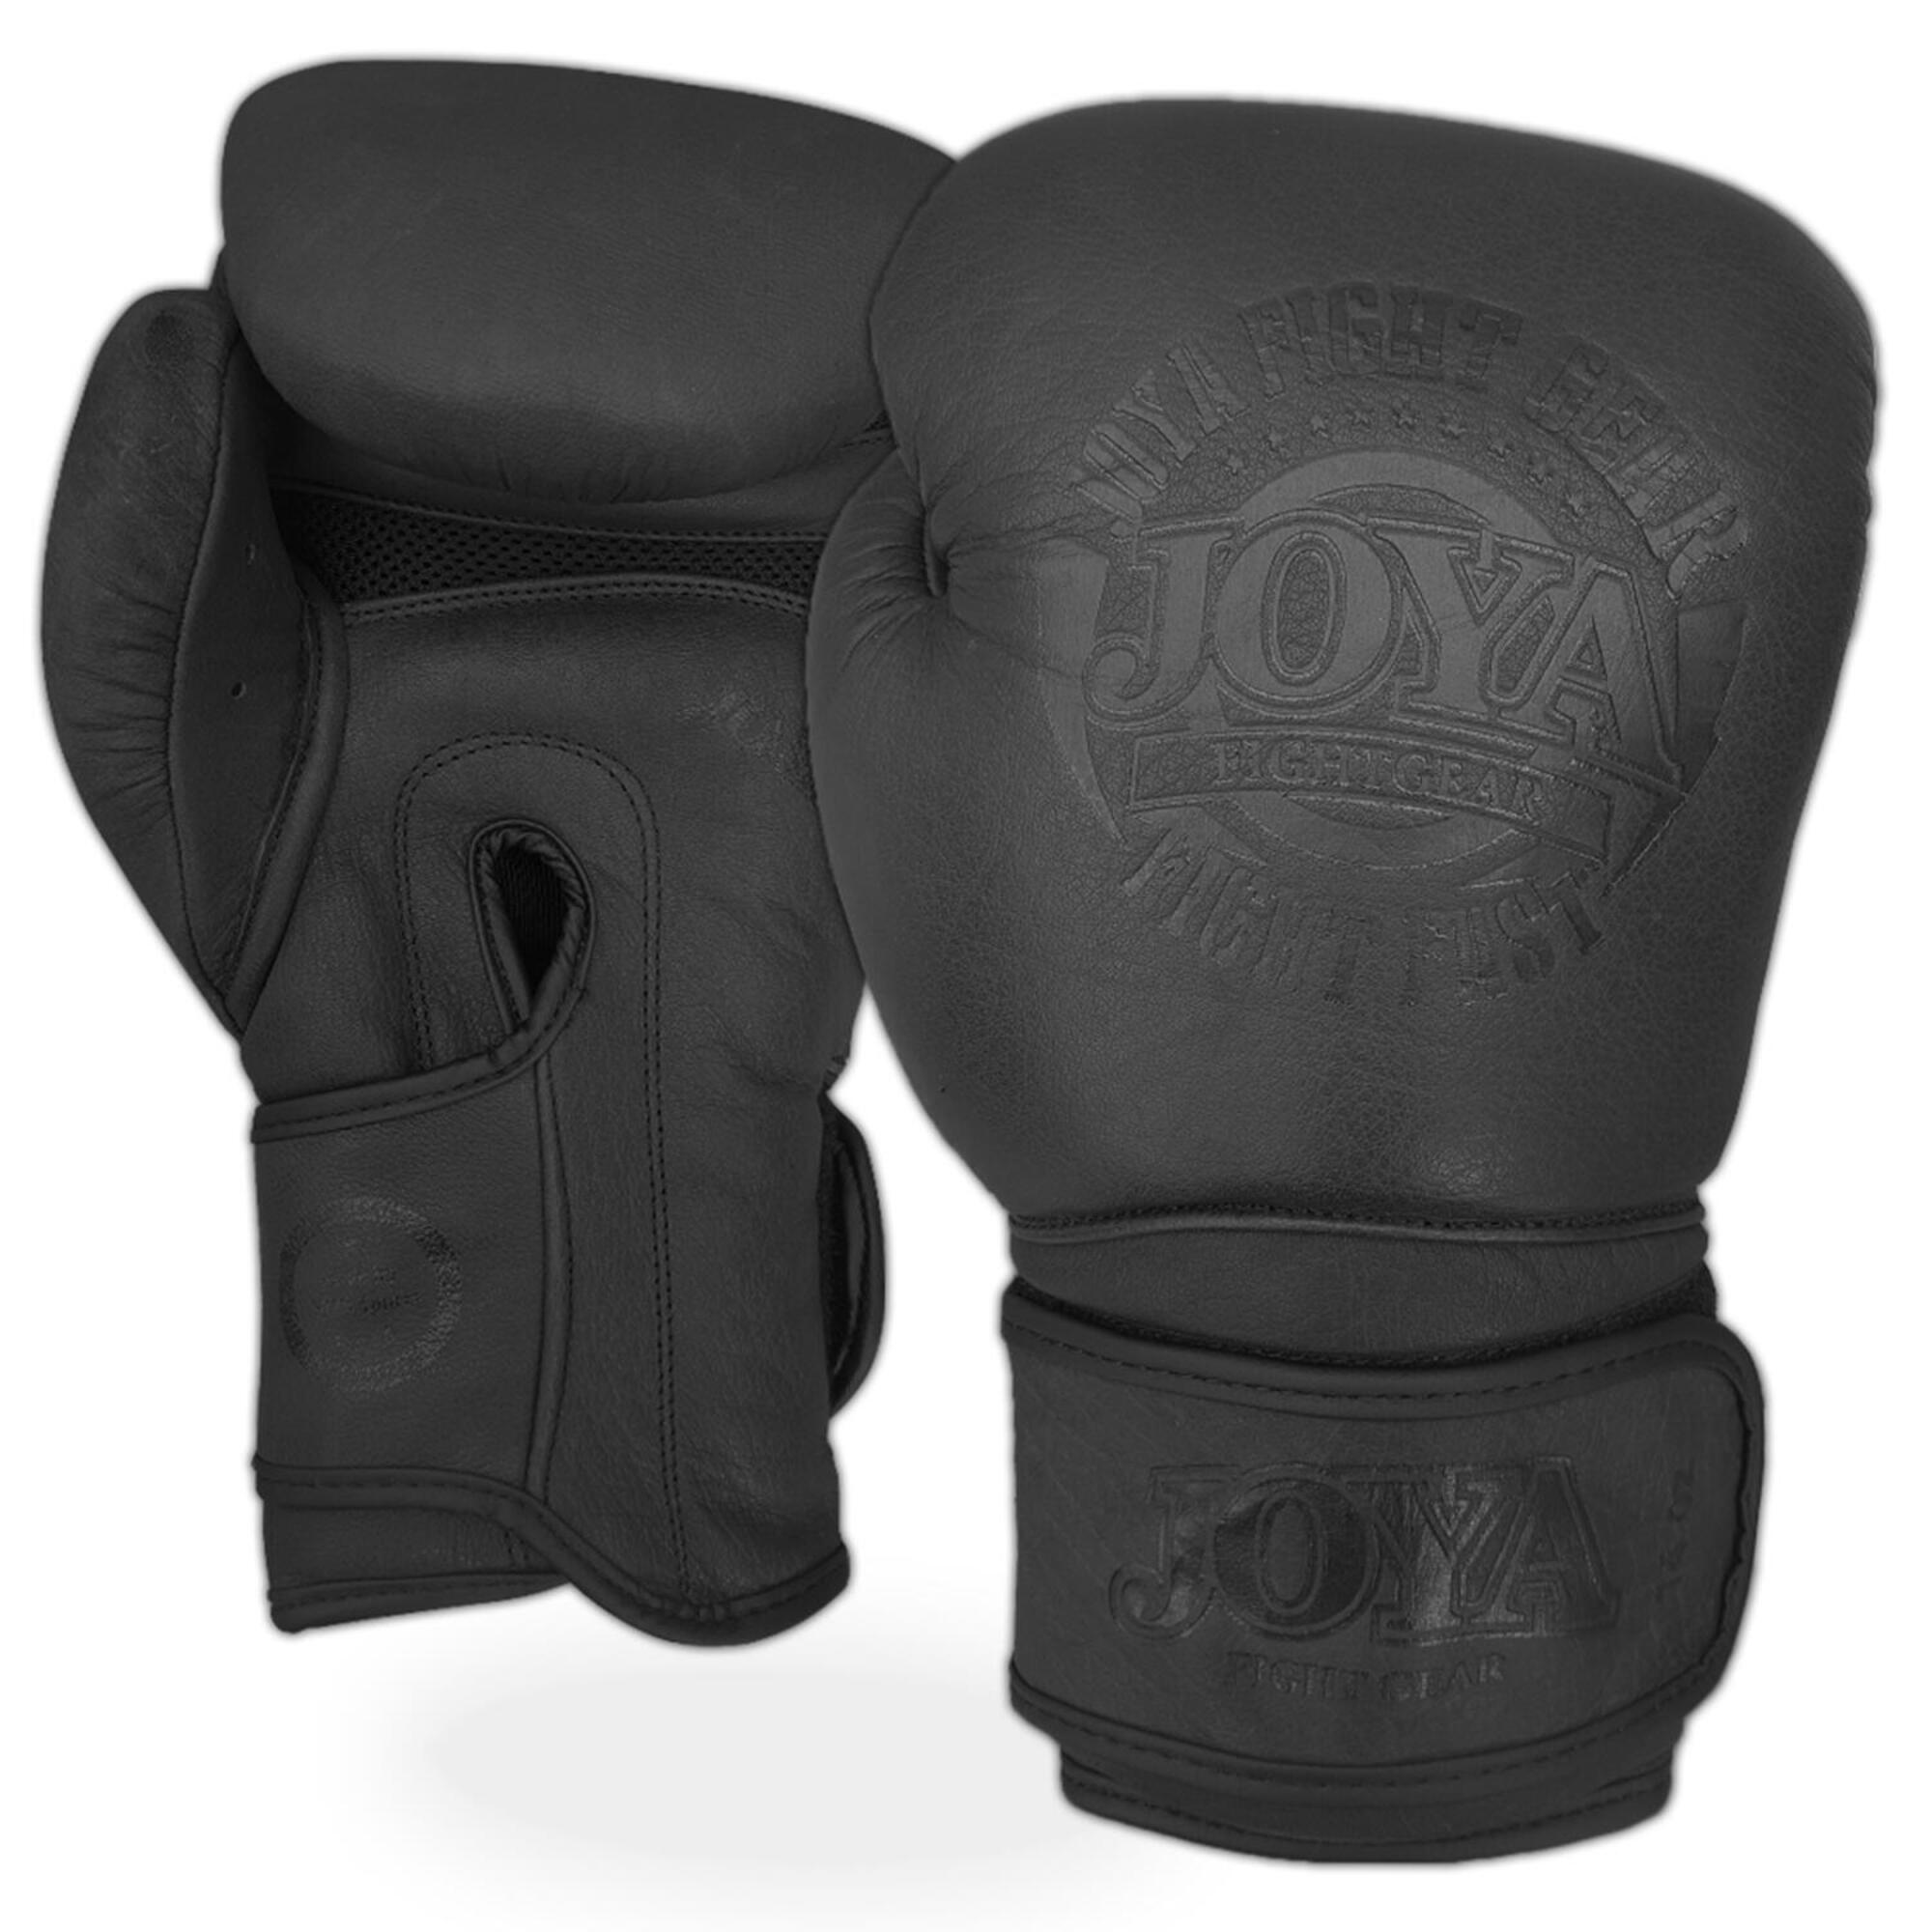 Боксерские перчатки Joya Fight Fast черные кожаные 16 унций, черный боксерские перчатки twins special bgvla 2 black white 16 унций